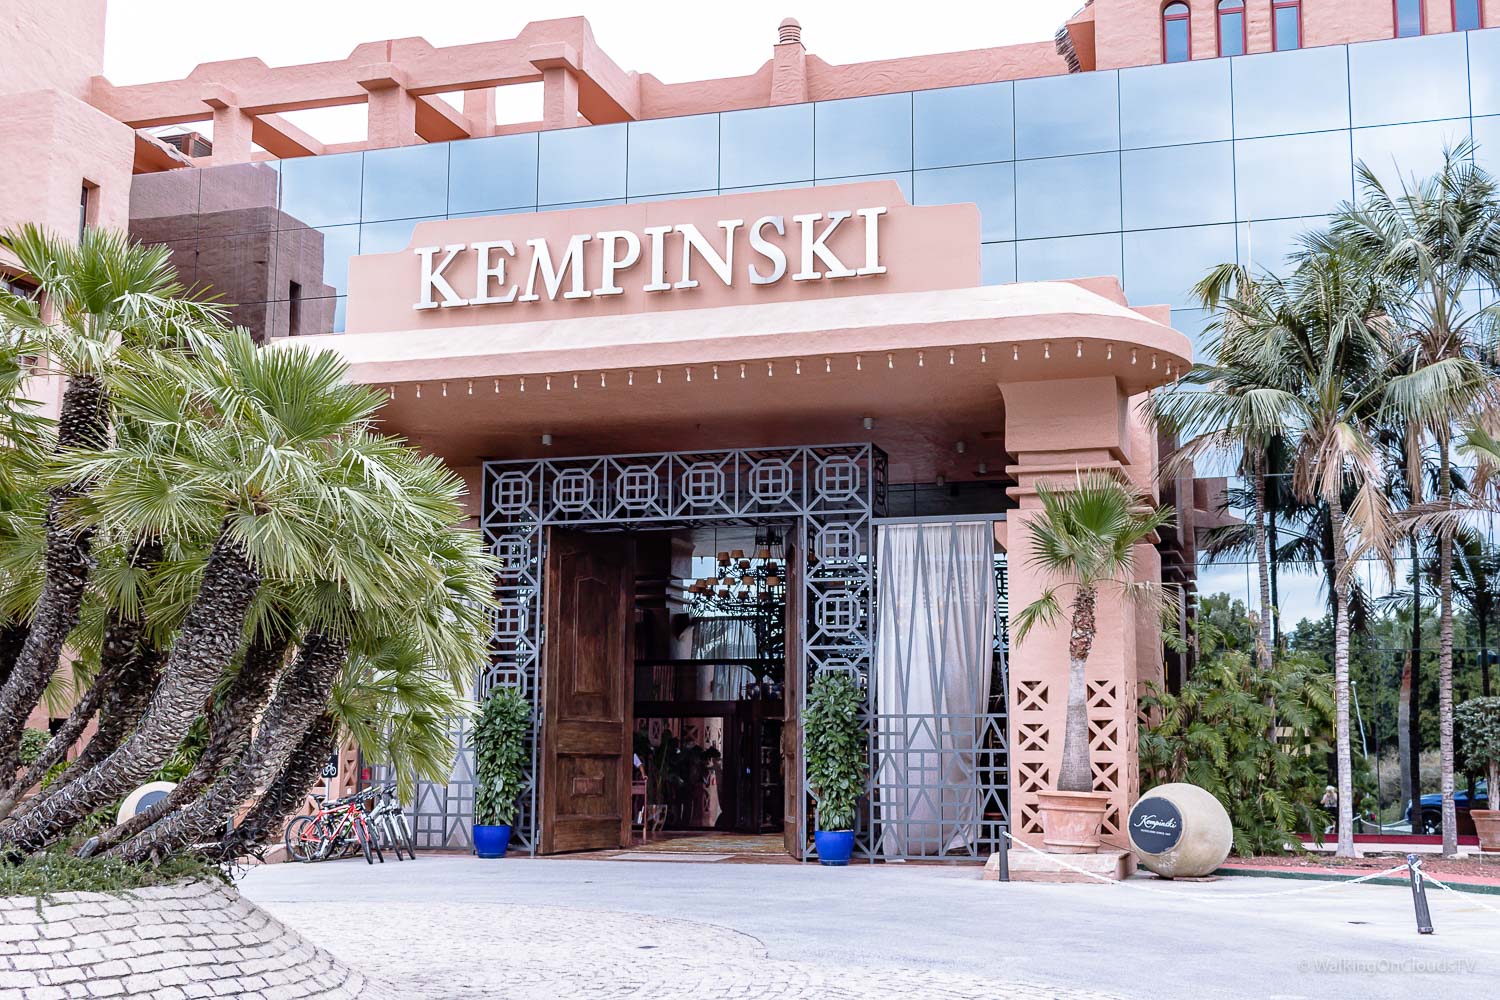 Kempinski Hotel Bahia. Das 5-Sterne-Hotel in Estepona - mein Aufenthalt, Spanien, Andalusien, Marbella, Reiseblog, Travelling, Best.Ager